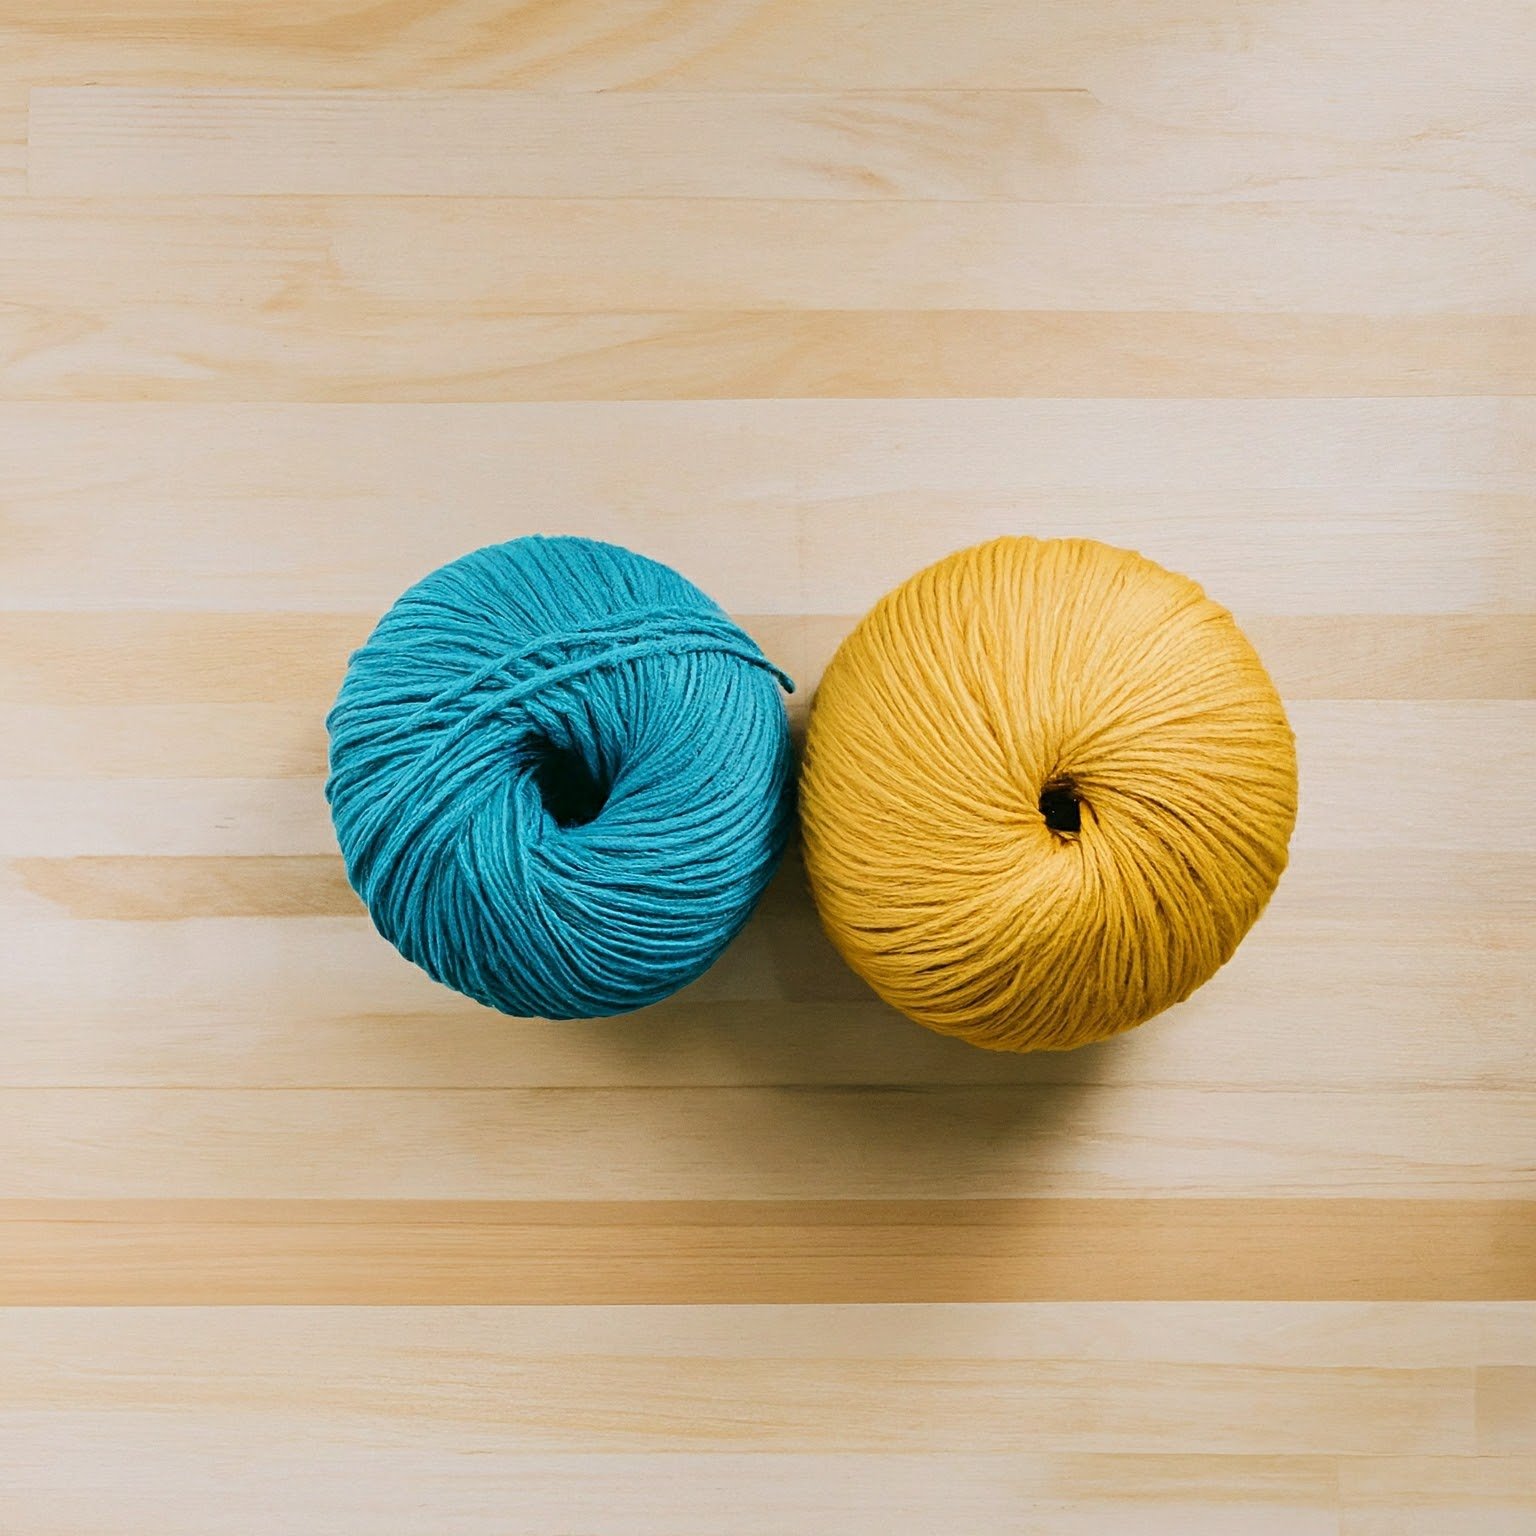 blue ball of yarn next to yellow ball of yarn